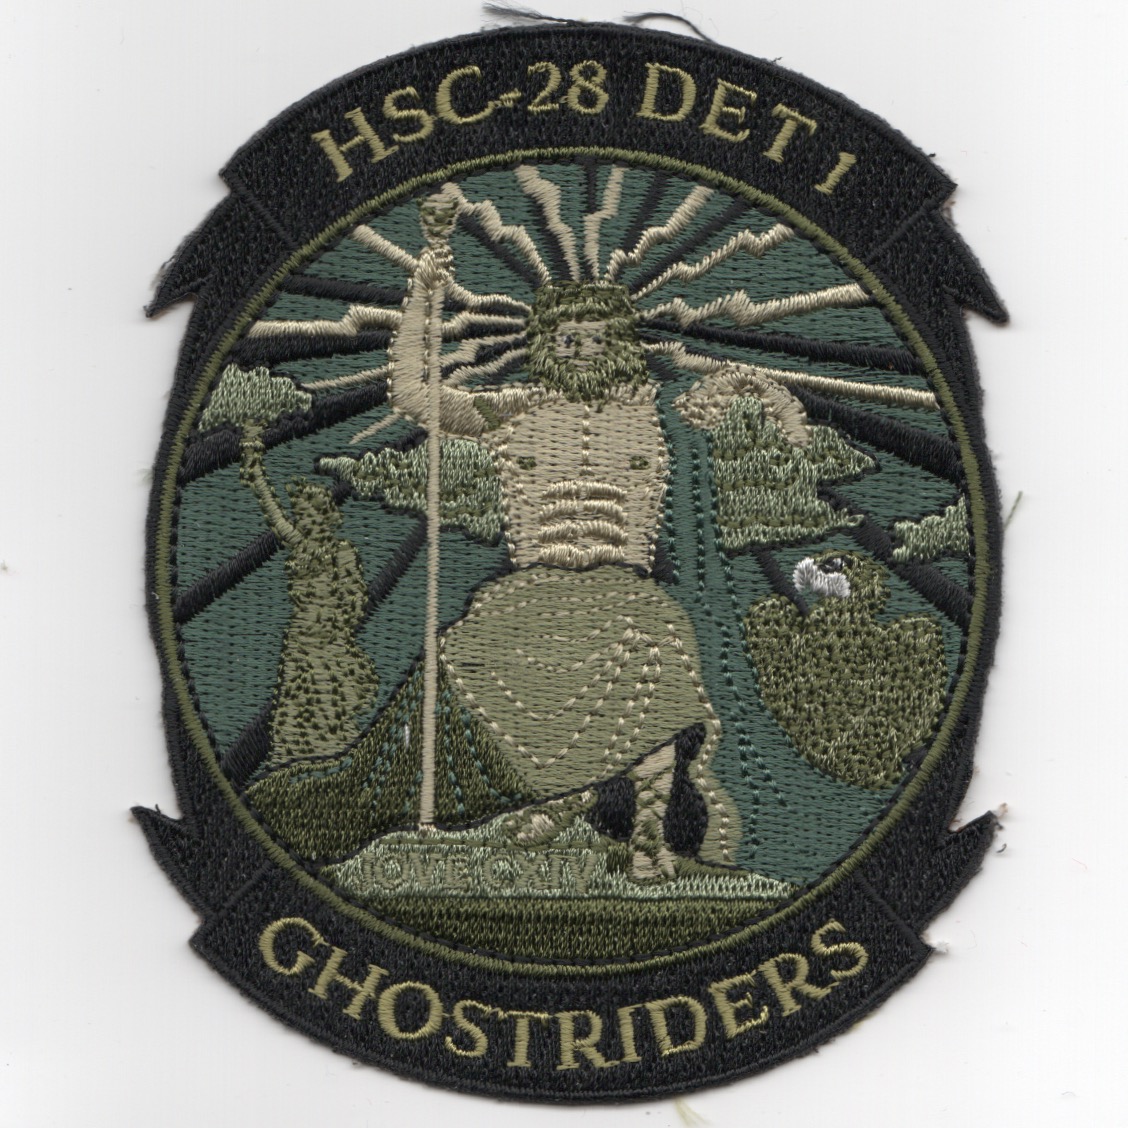 HSC-28 Det-1 'Ghostriders' Patch (ZEUS-OCP)